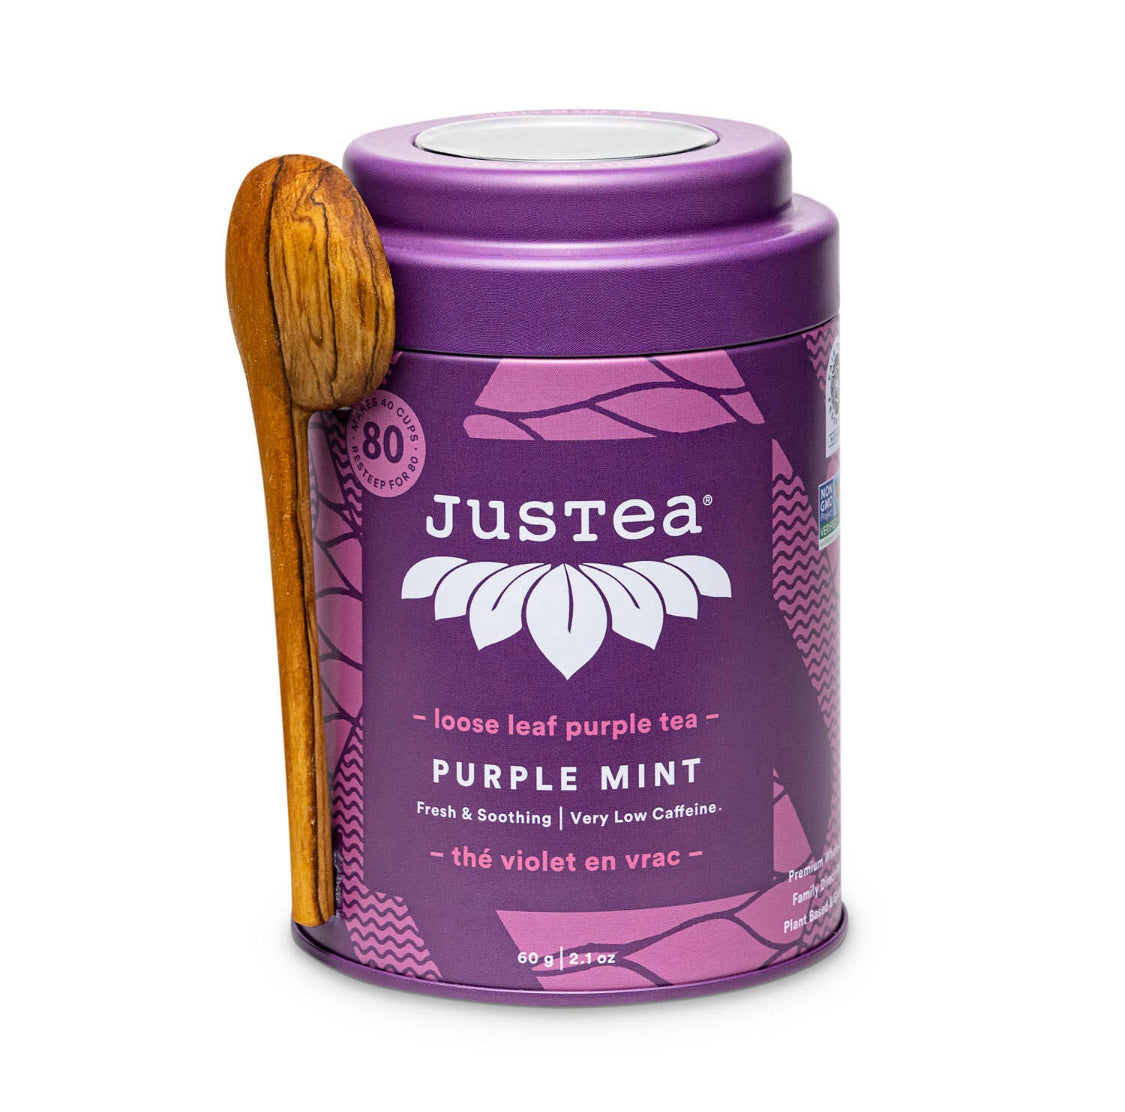 Justea Purple Mint